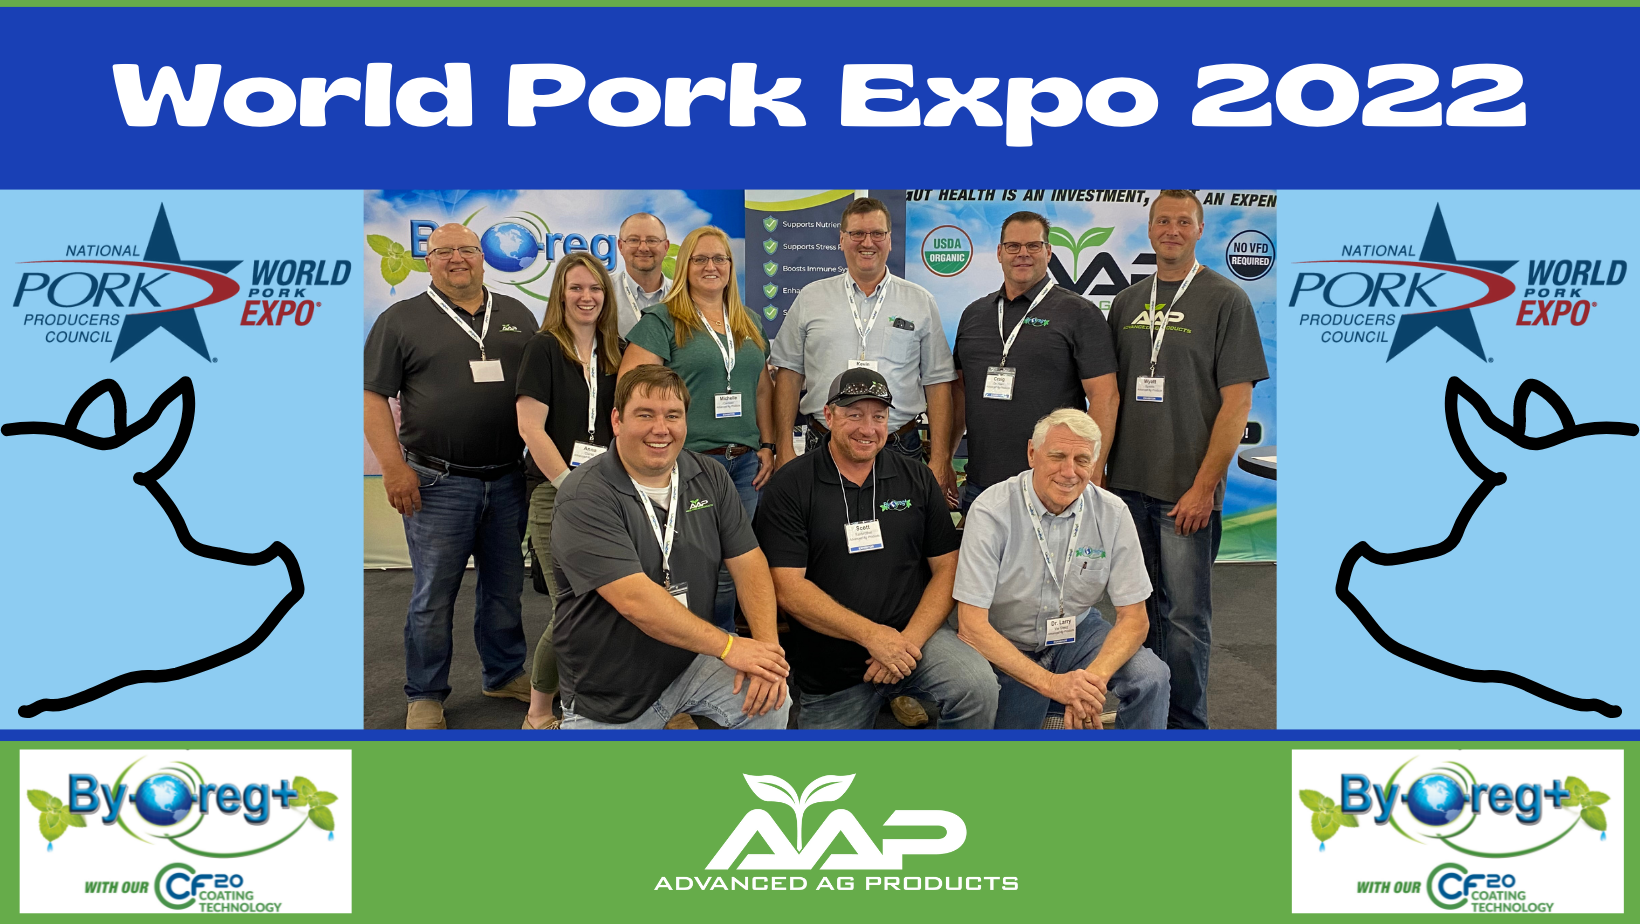 2022 World Pork Expo Recap ByOreg+